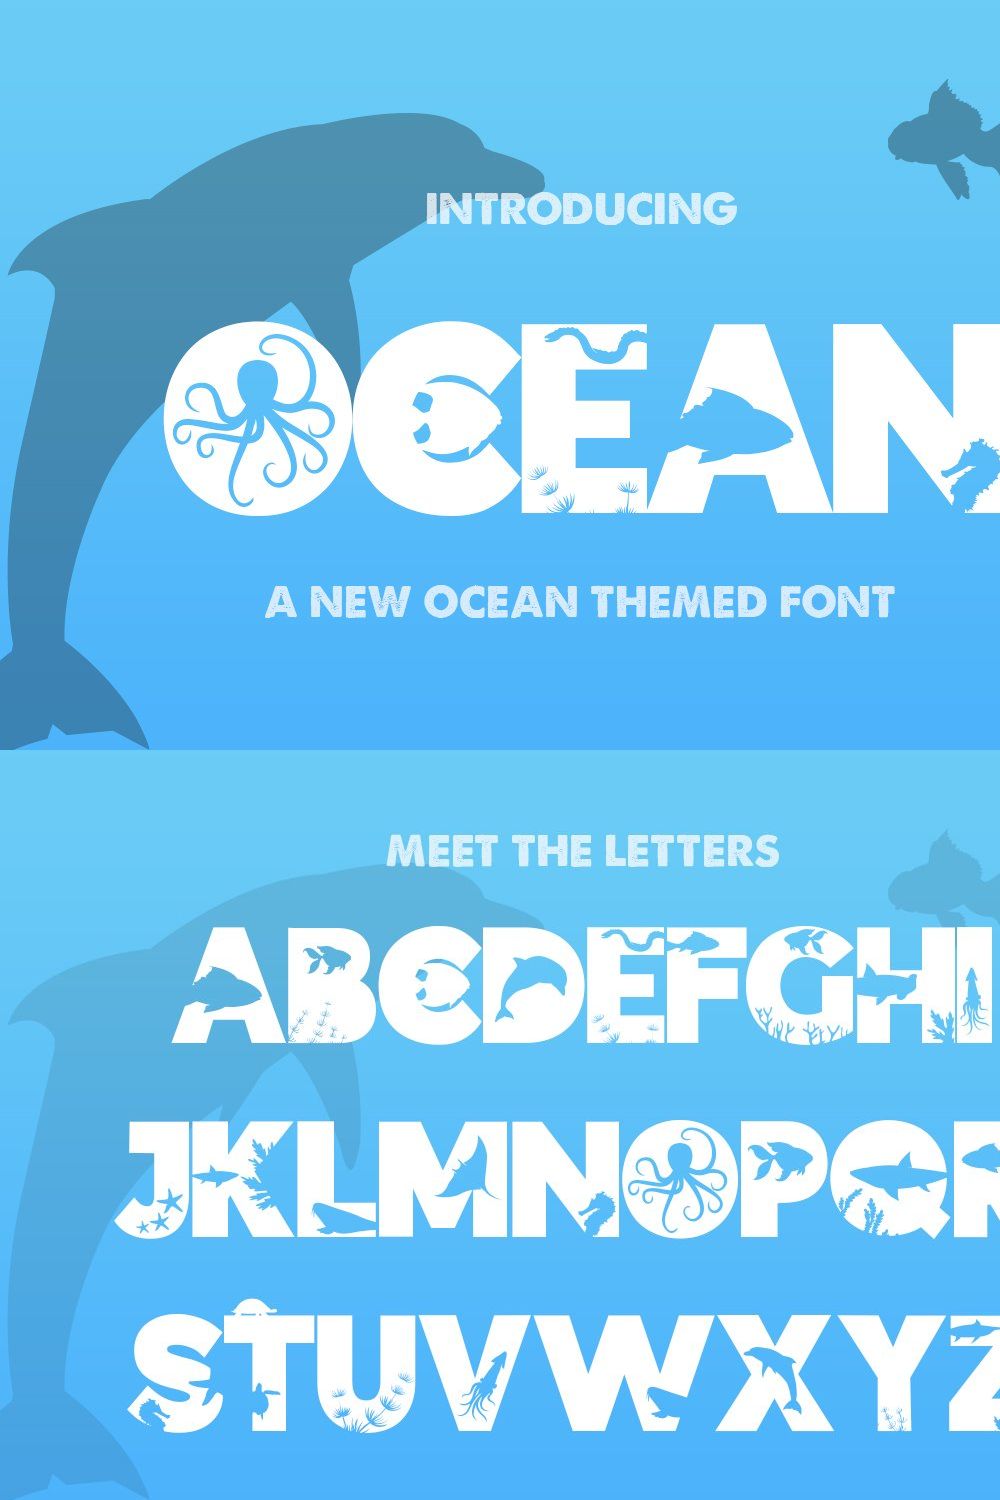 The Ocean Font pinterest preview image.